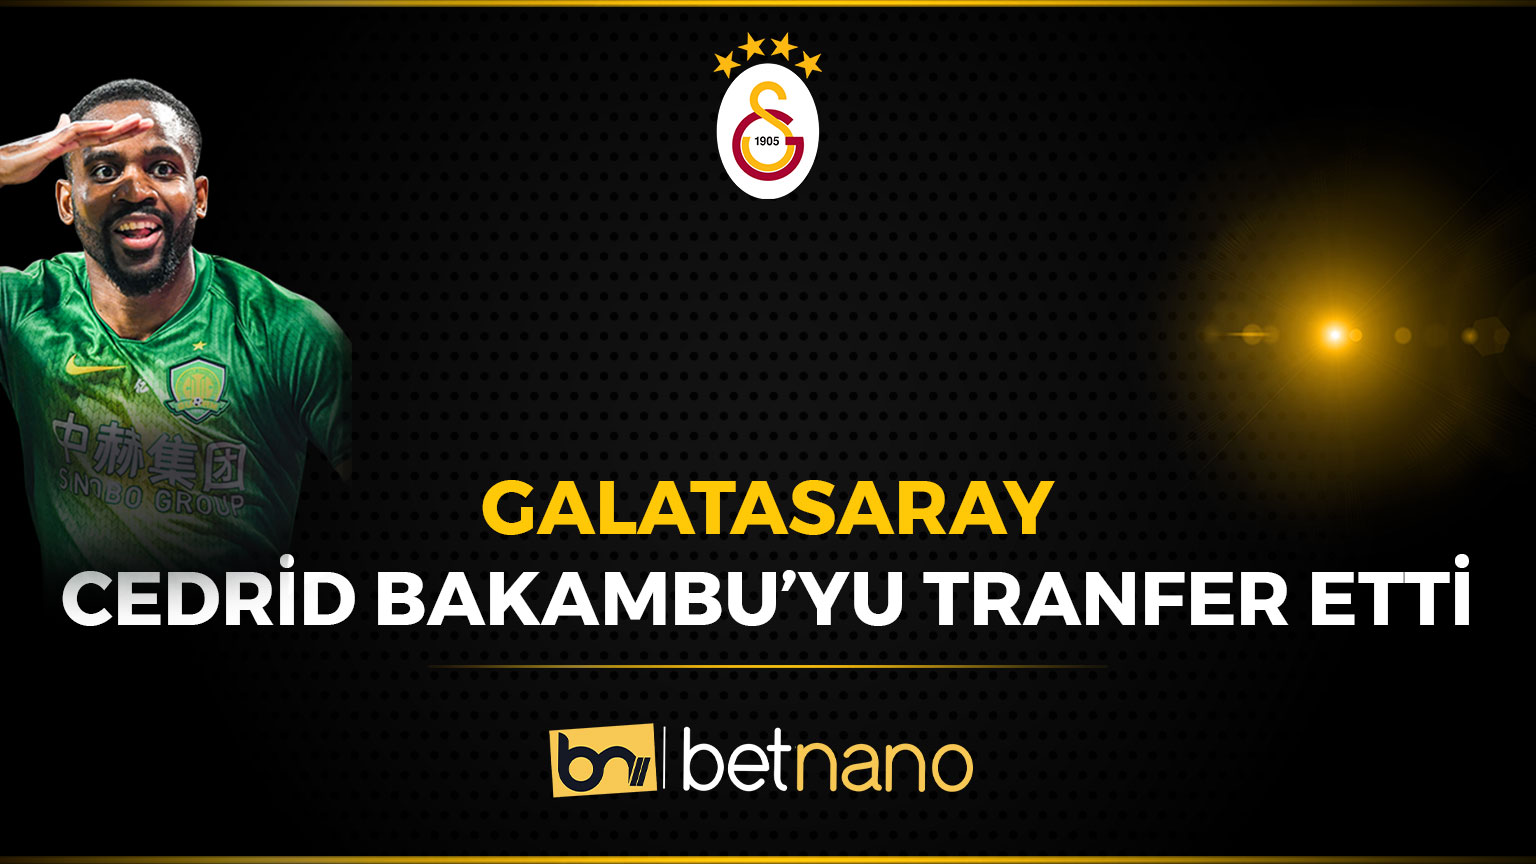 Galatasaray Cedric Bakambu’yu Transfer Etti!